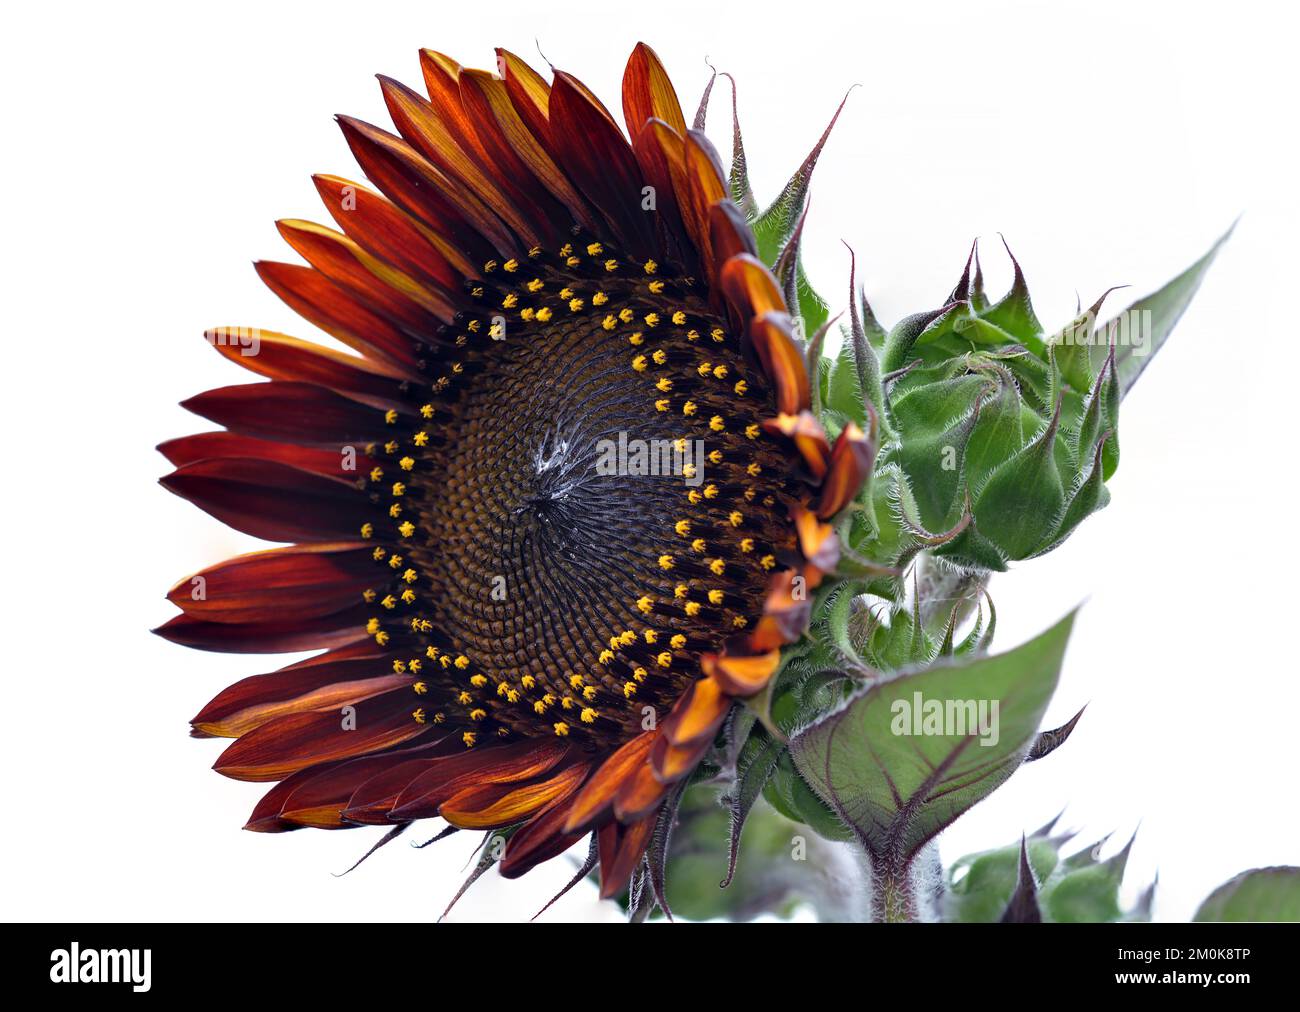 Helianthus annuus sunflower plant in bloom Stock Photo